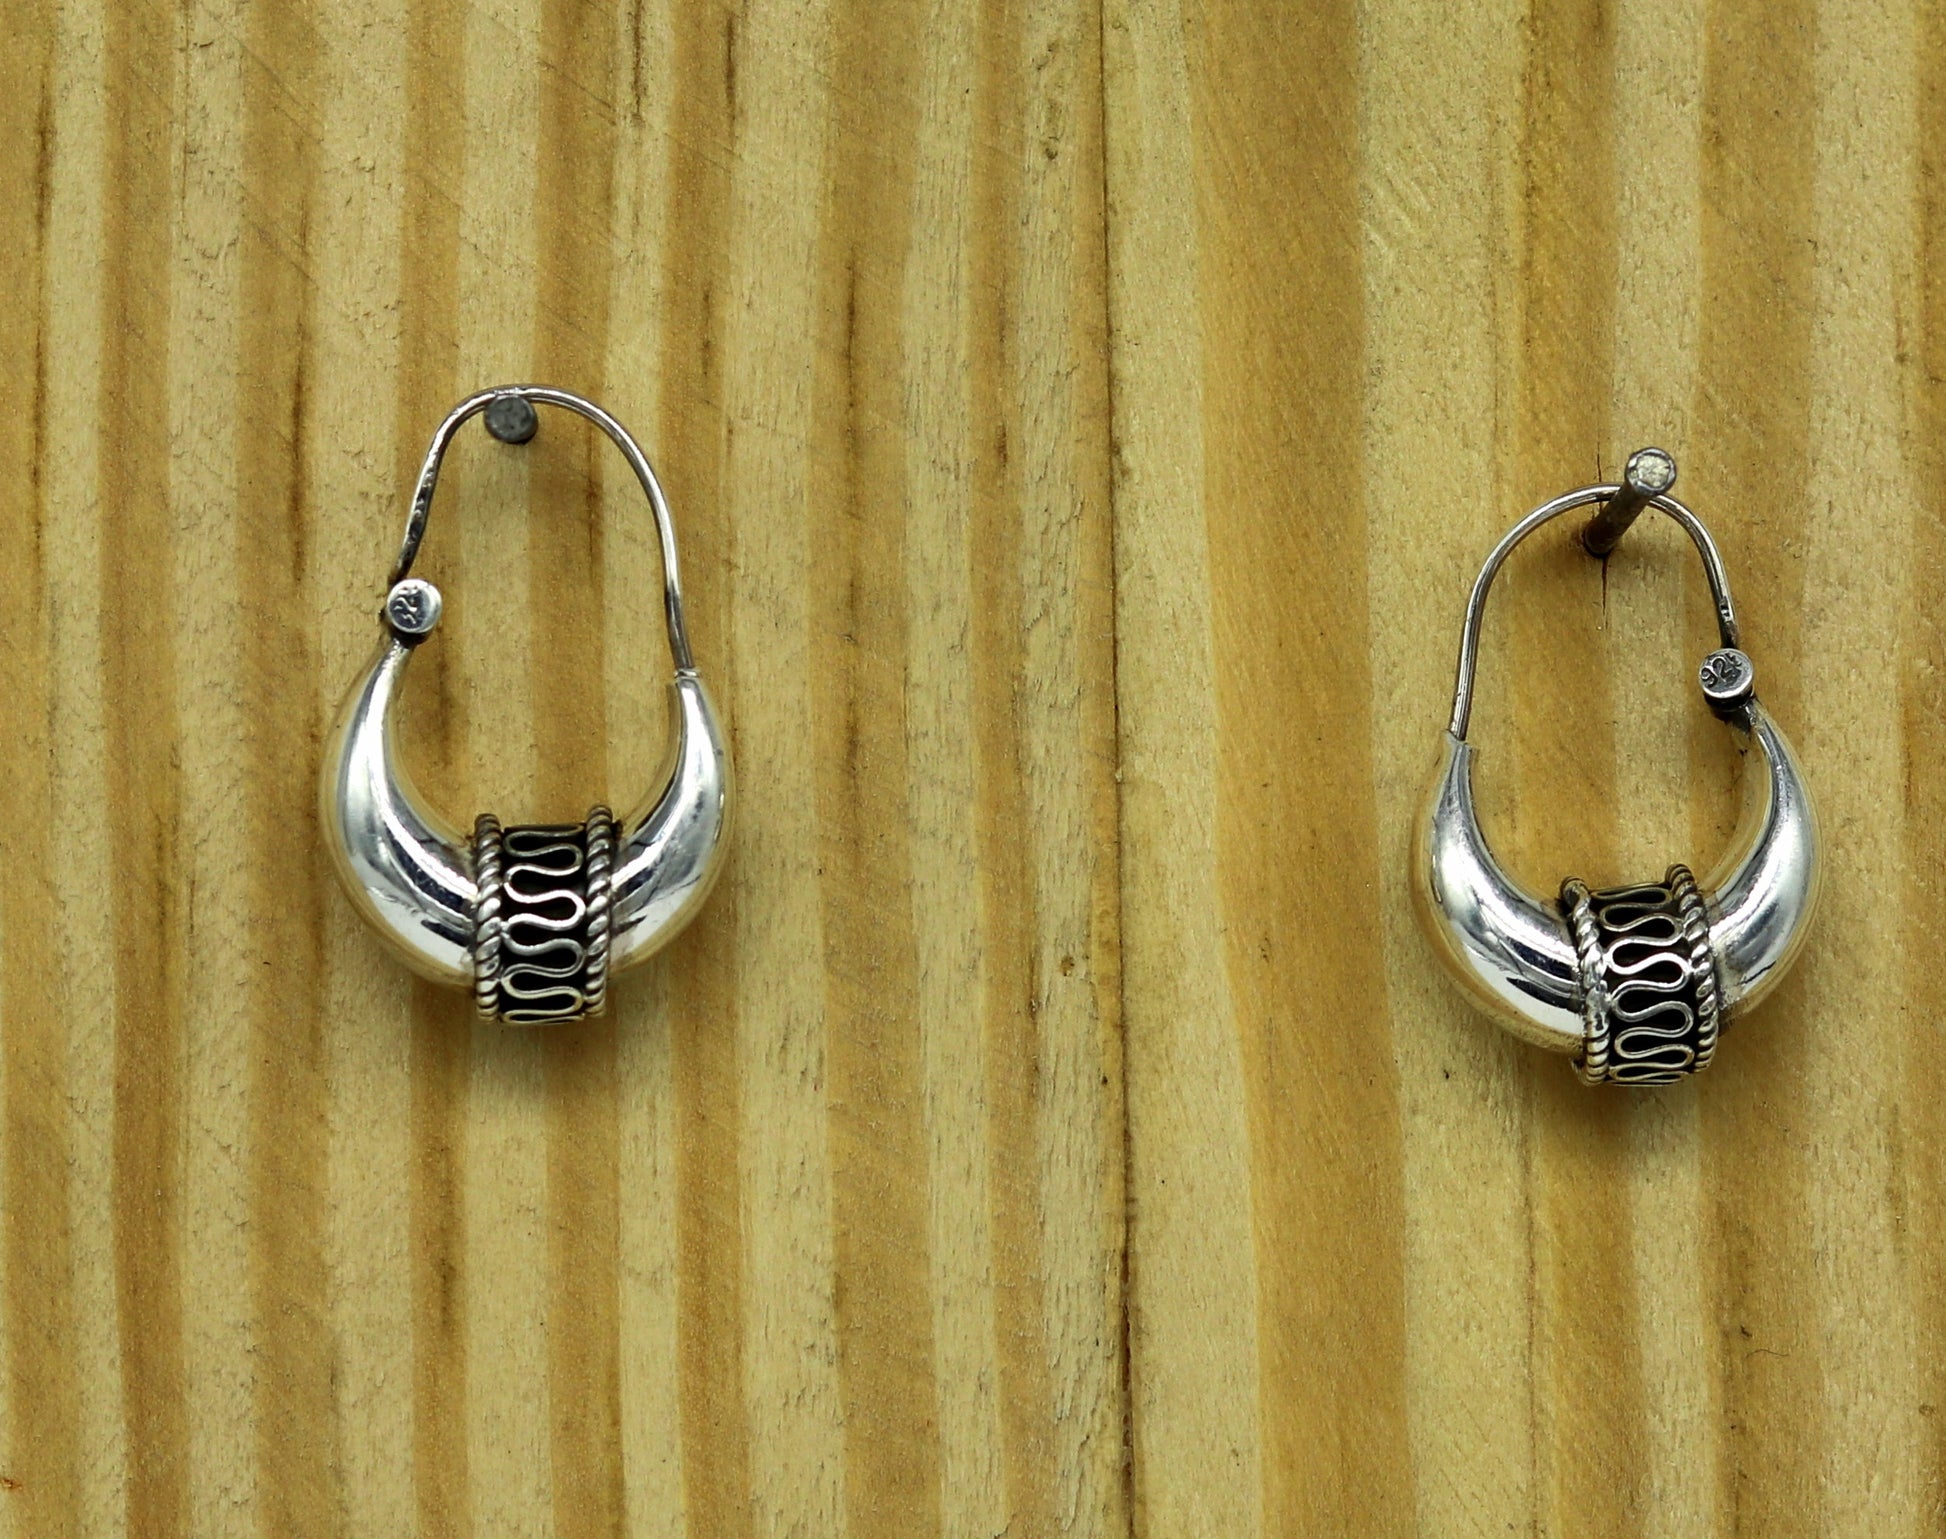 925 sterling silver handmade vintage antique design amazing design hoops earring bali, customized earring gift tribal ethnic jewelry ske2 - TRIBAL ORNAMENTS